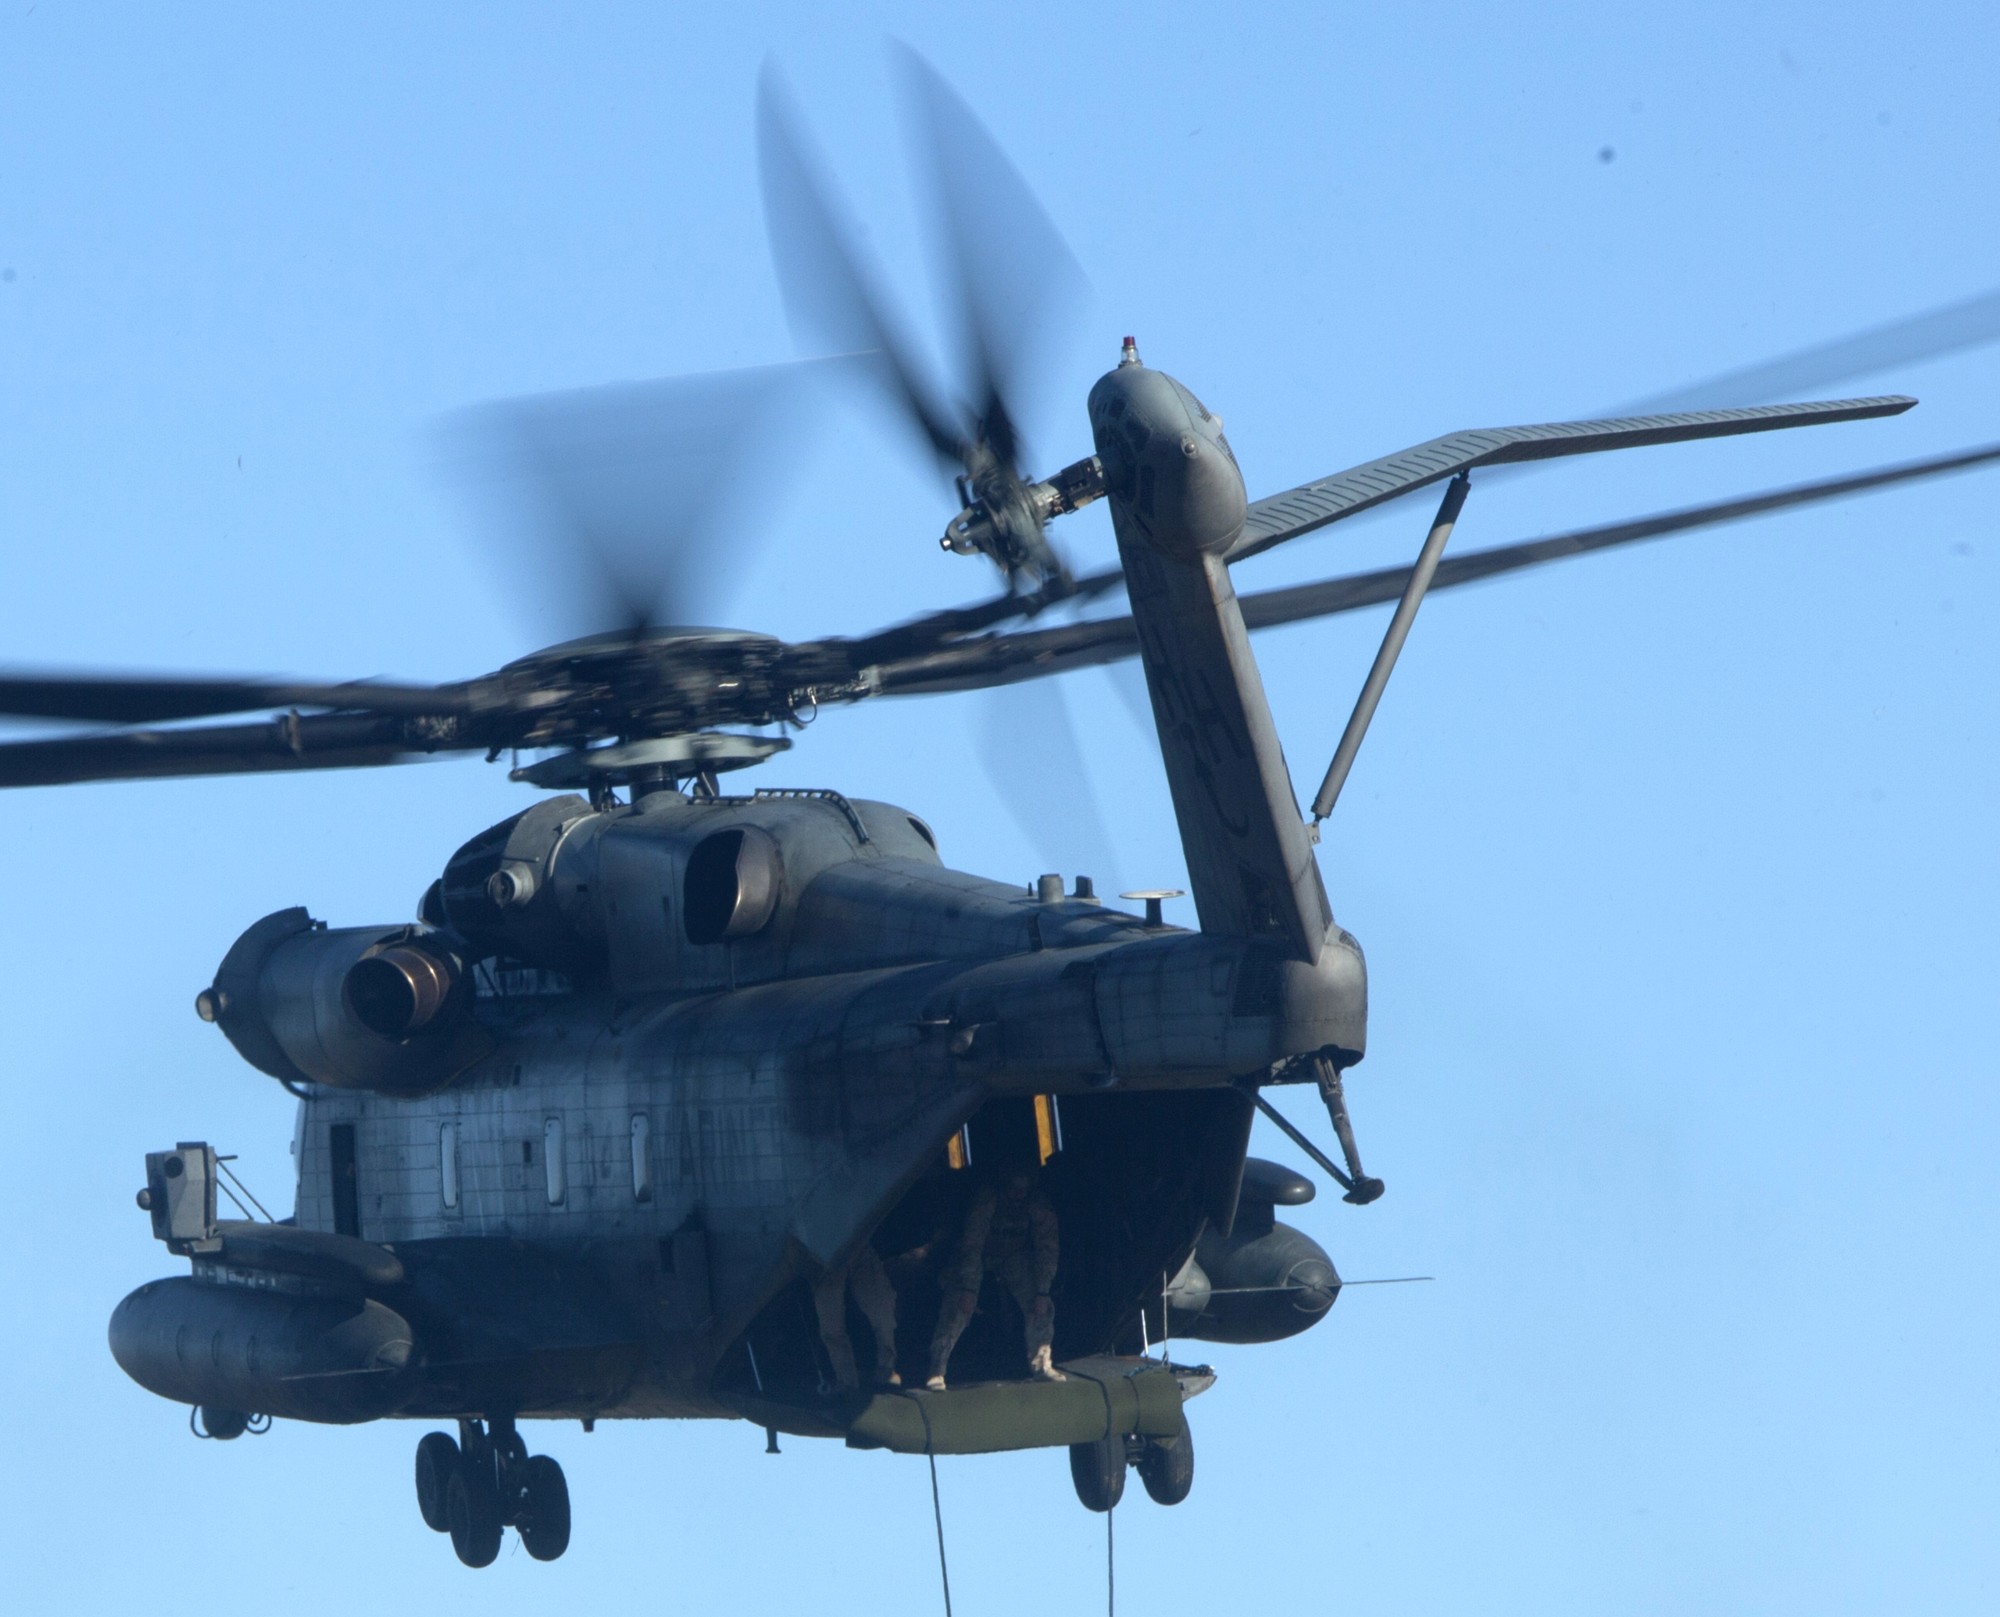 hmh-366 hammerheads marine heavy helicopter squadron usmc sikorsky ch-53e super stallion 52